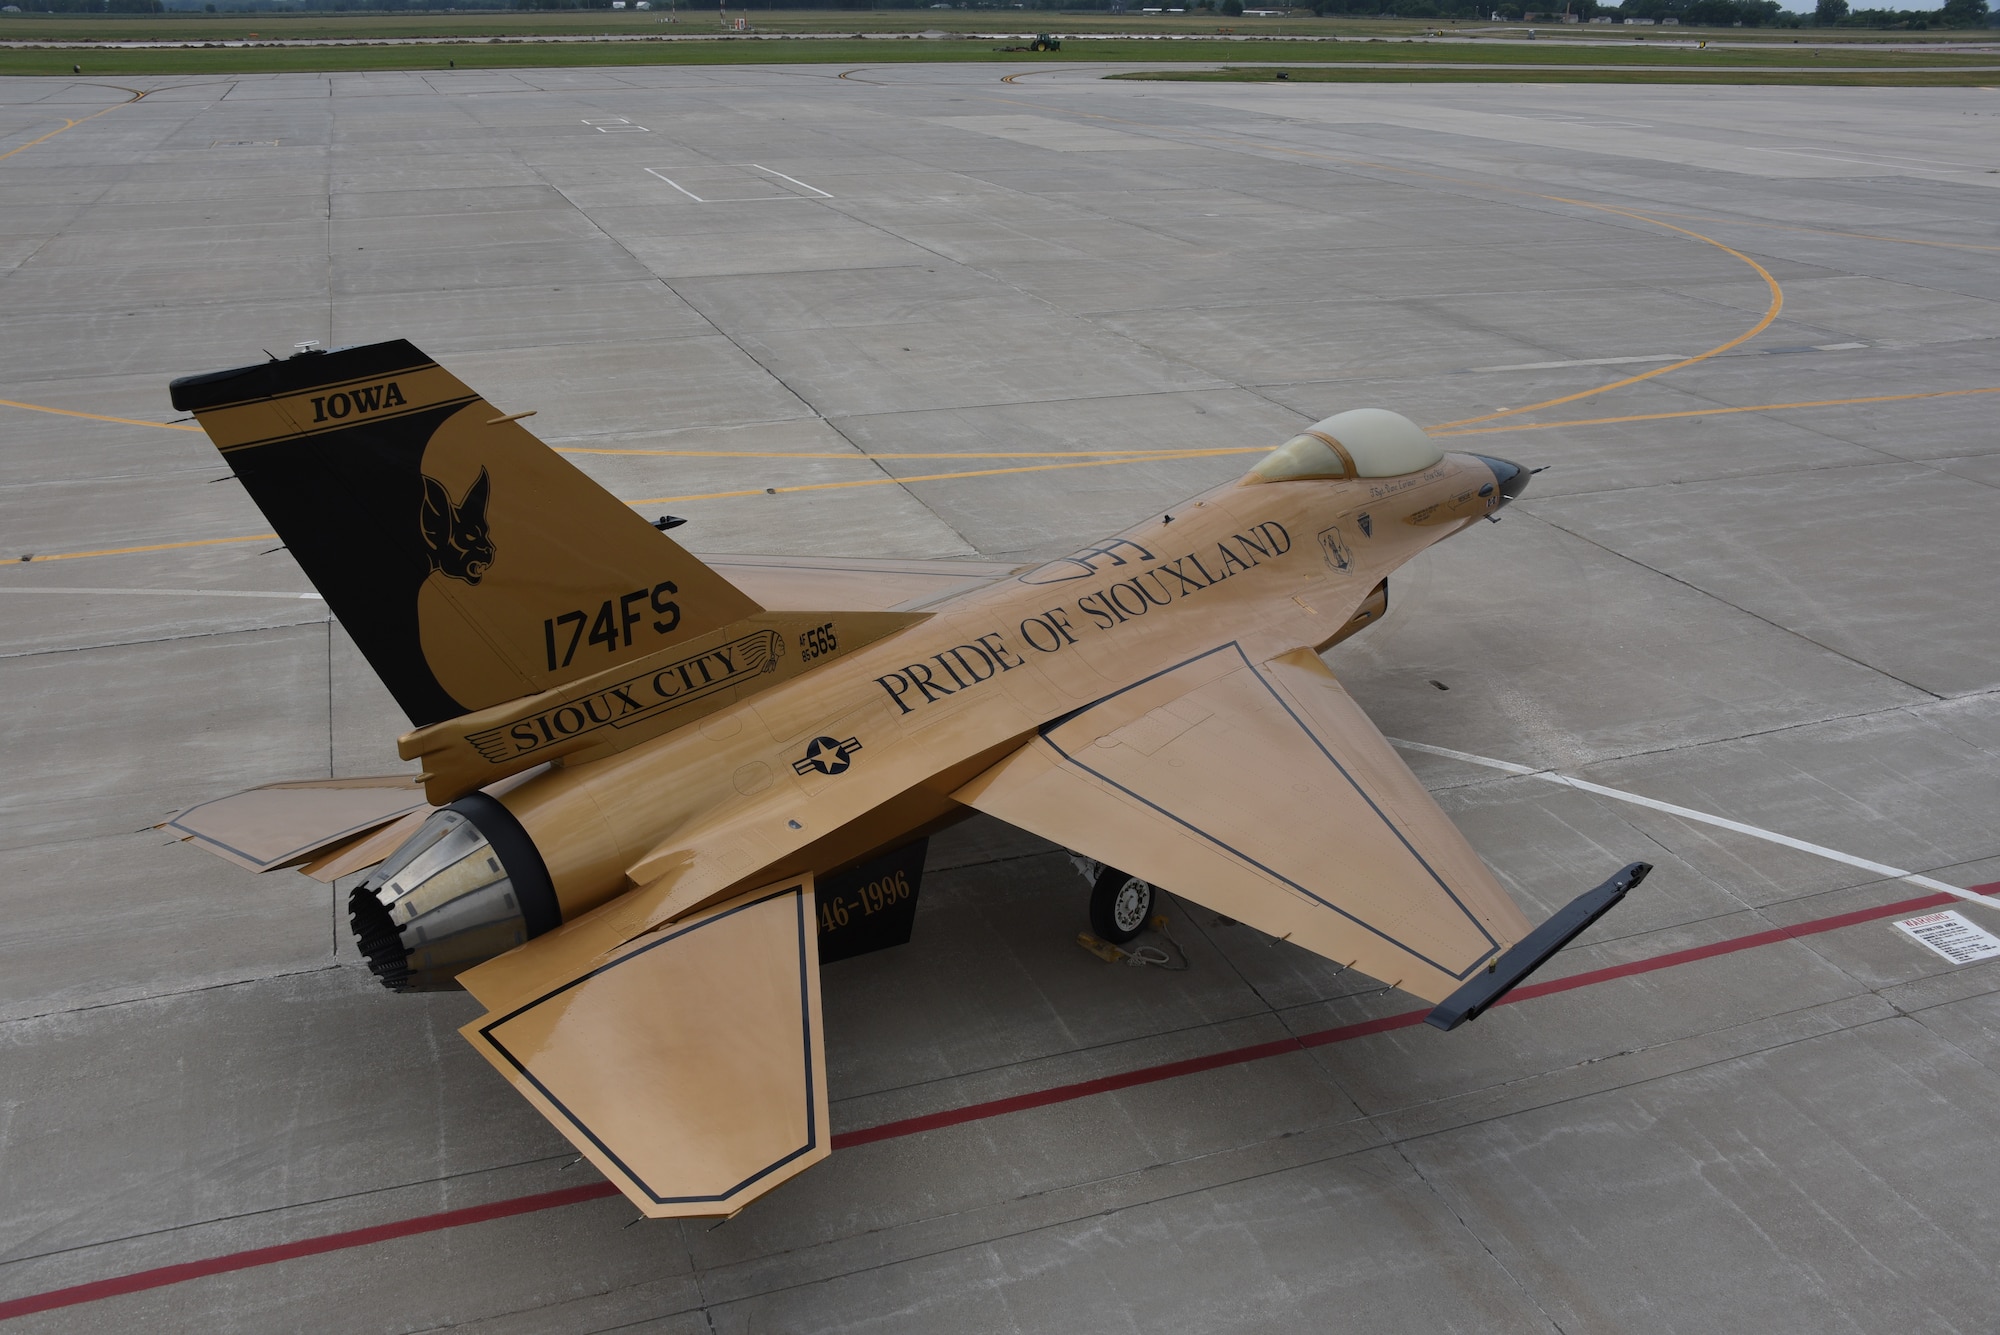 Gold F-16